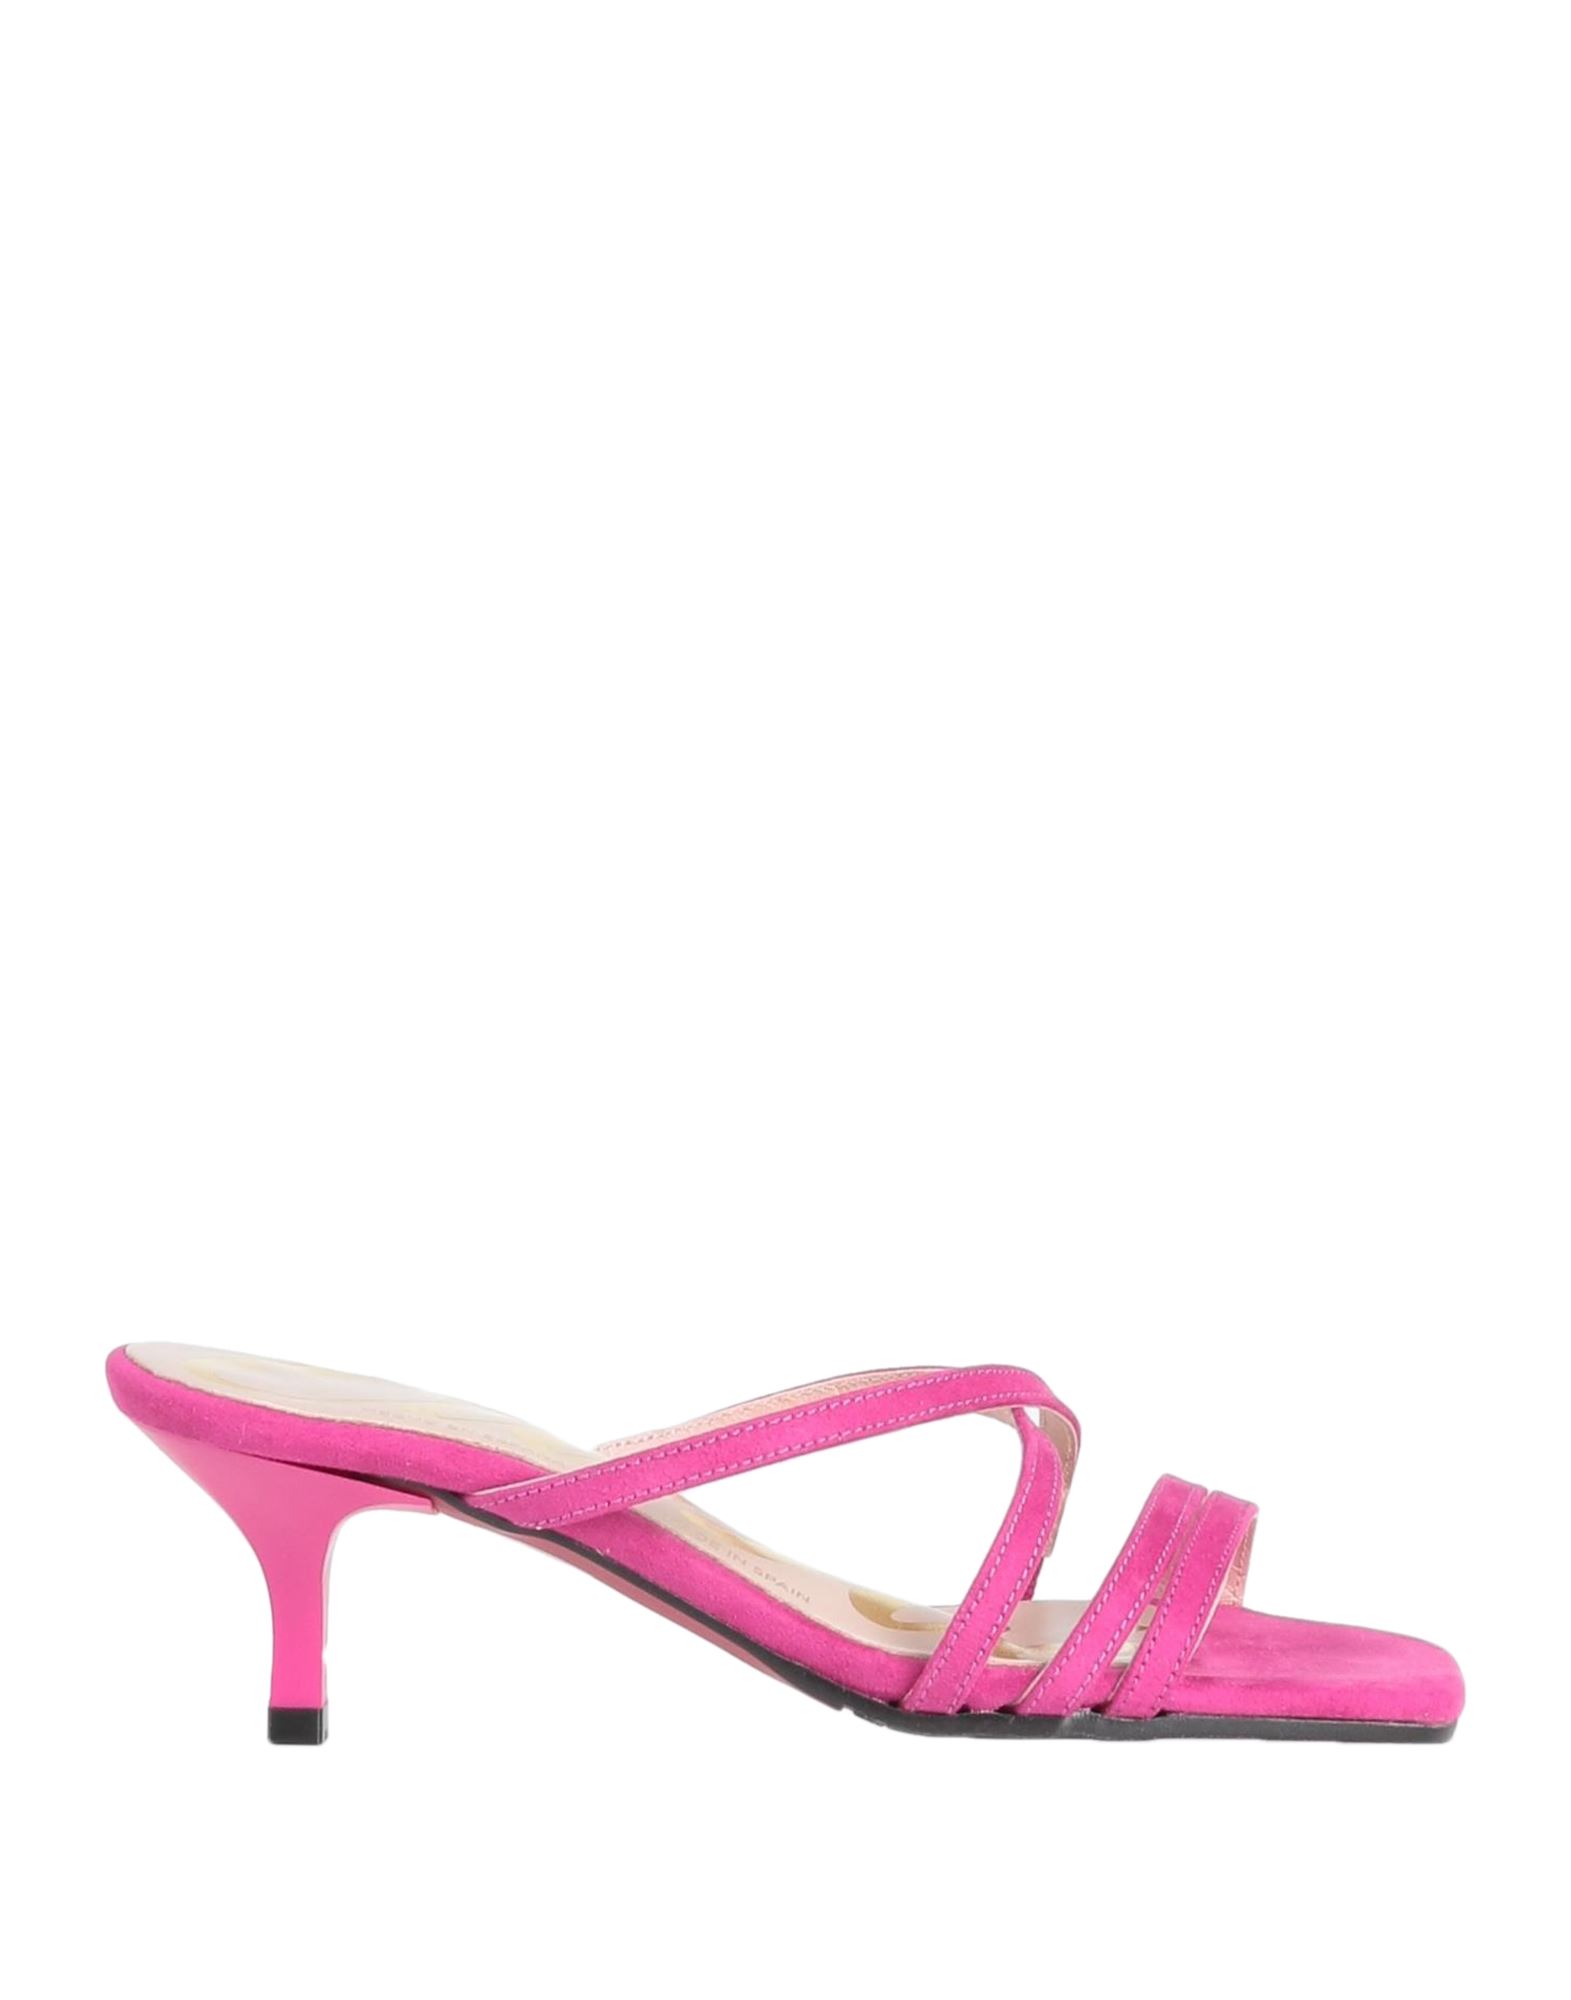 Cuplé Sandals In Pink